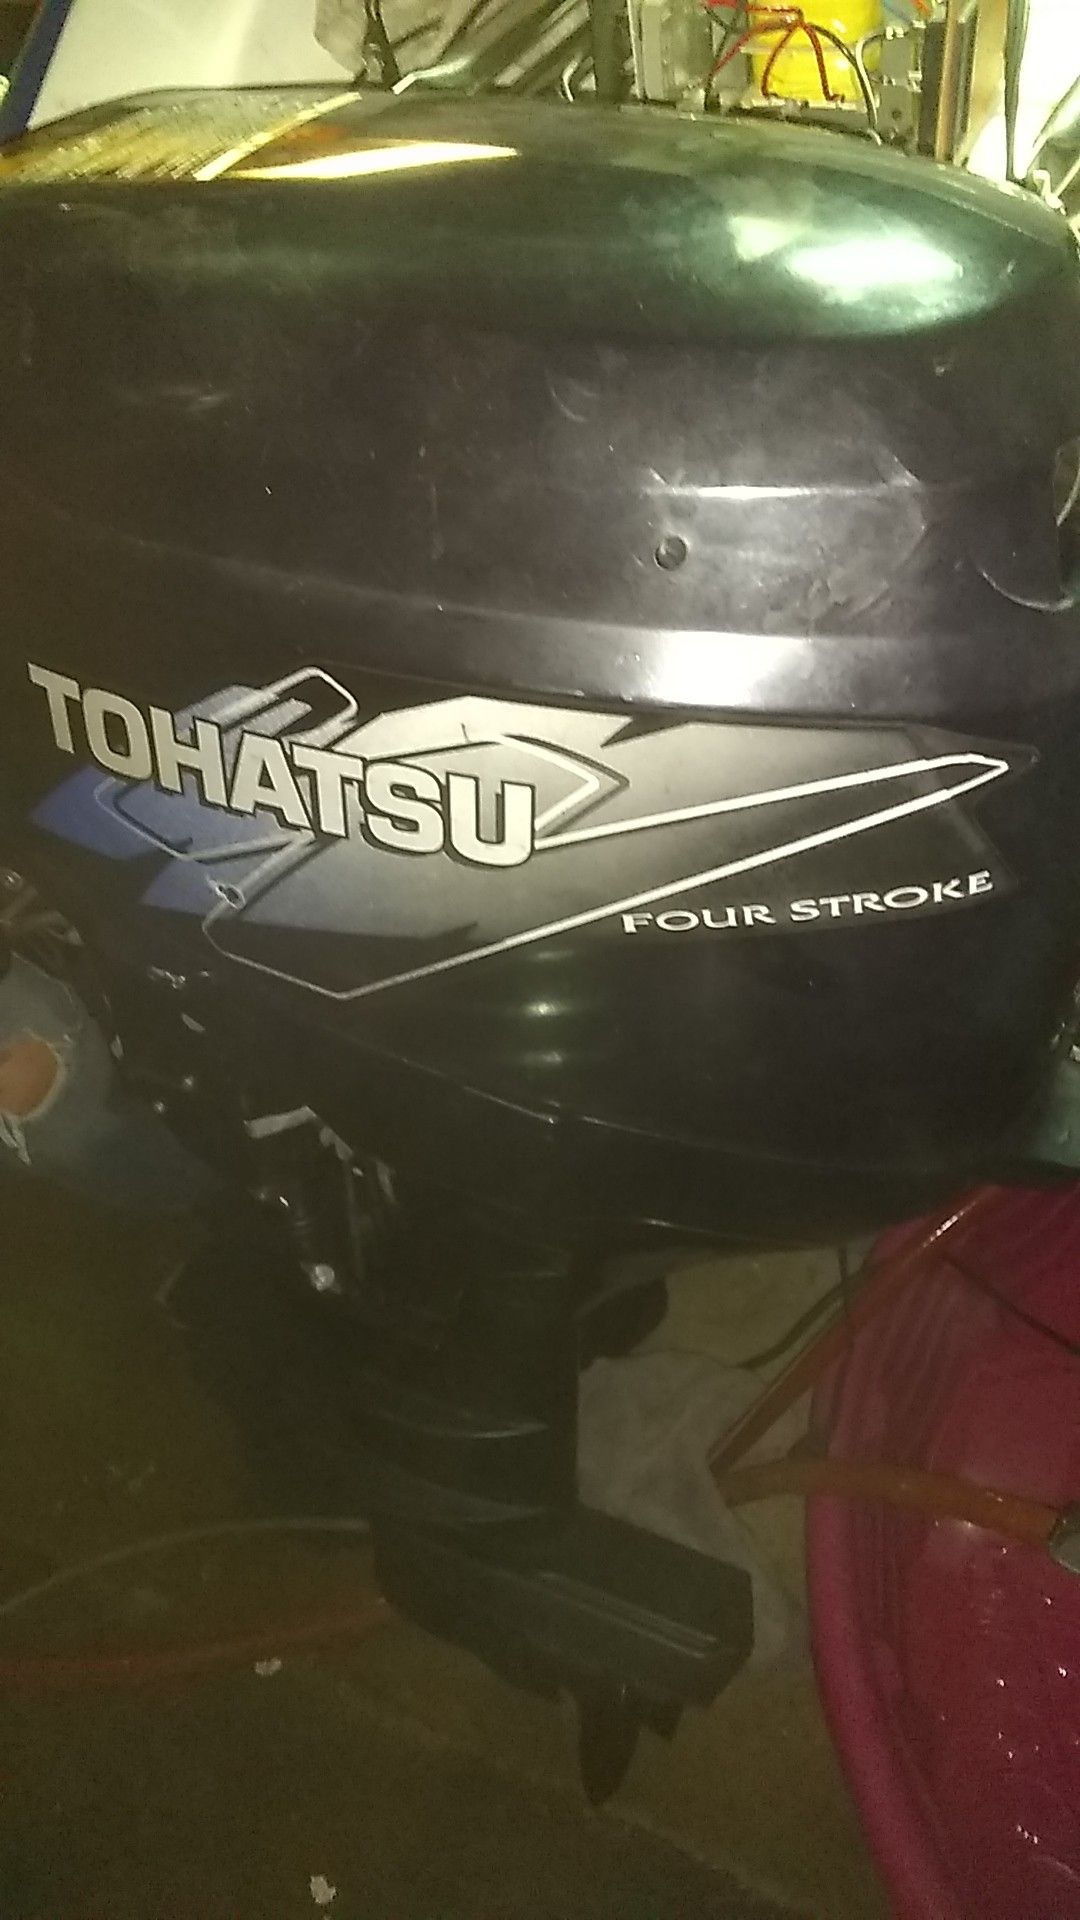 Tohatsu four stroke